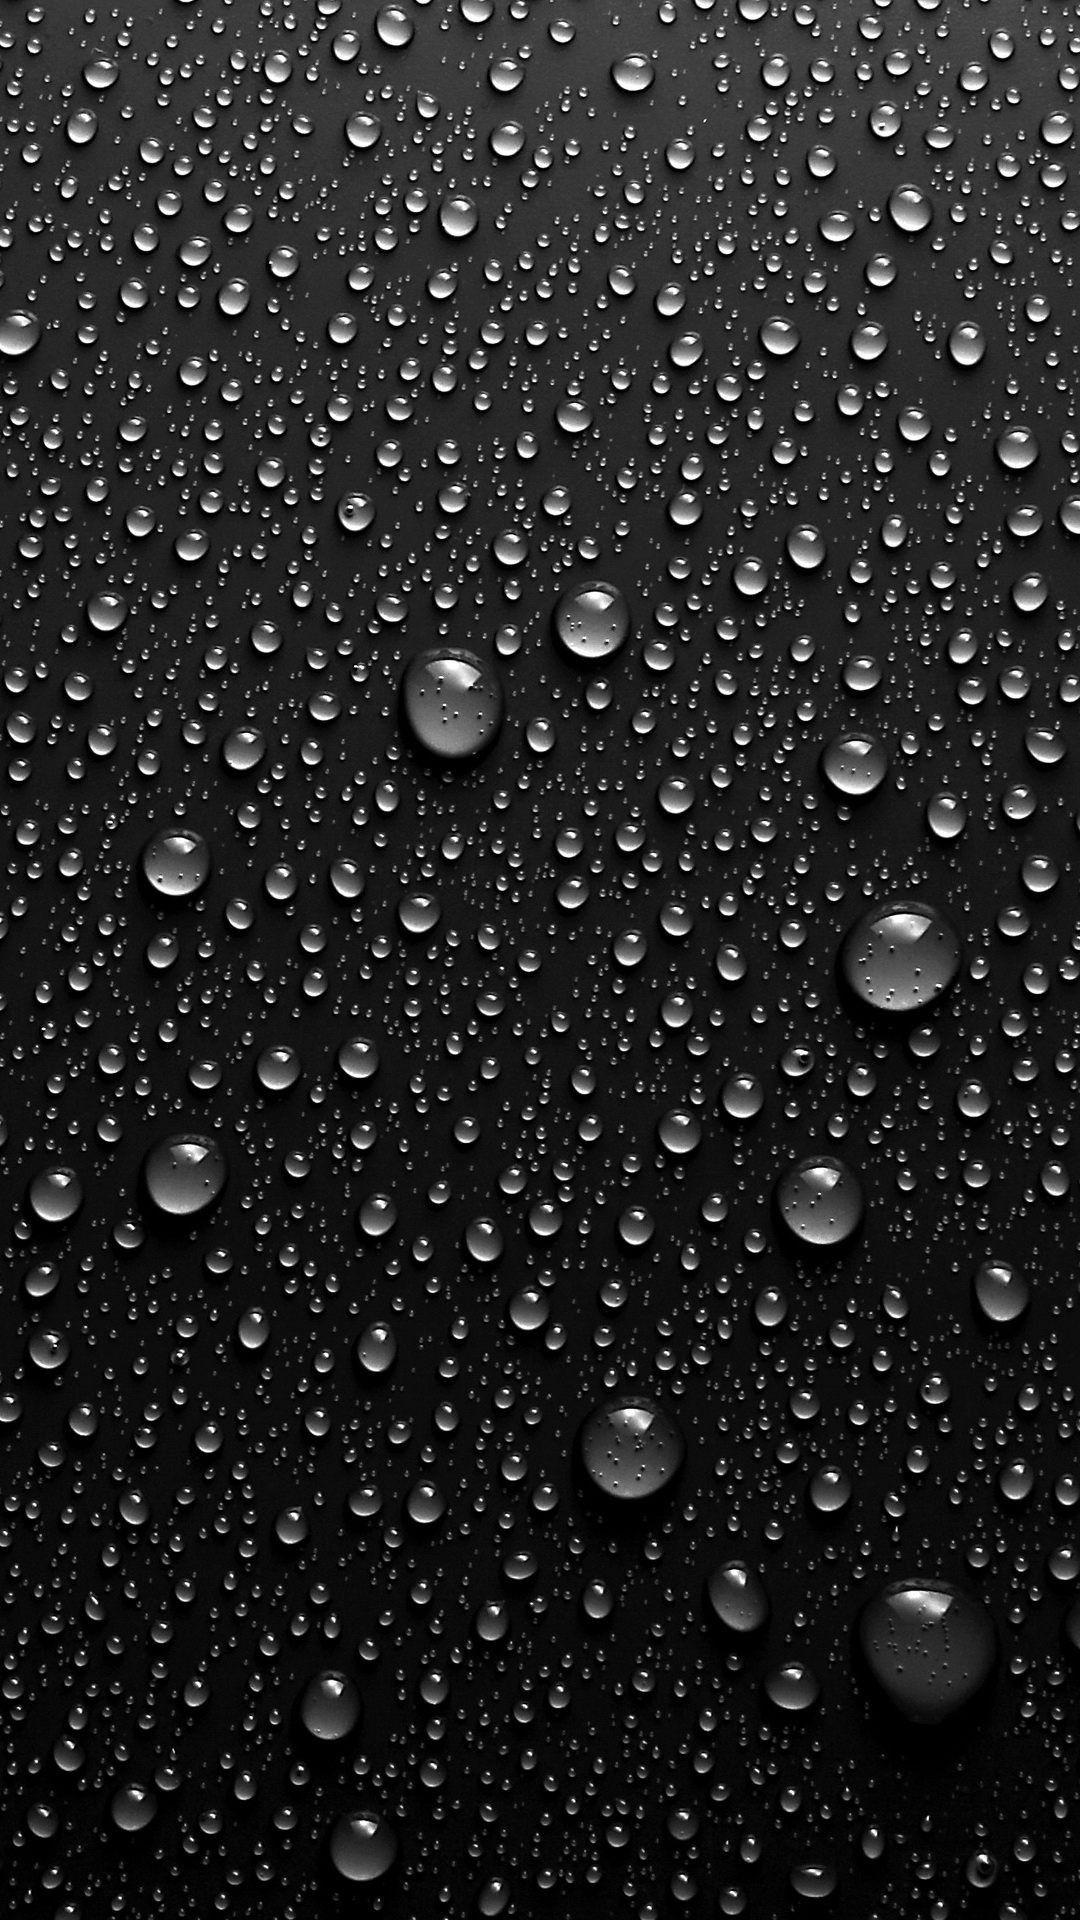 black live wallpaper,drop,moisture,water,dew,drizzle